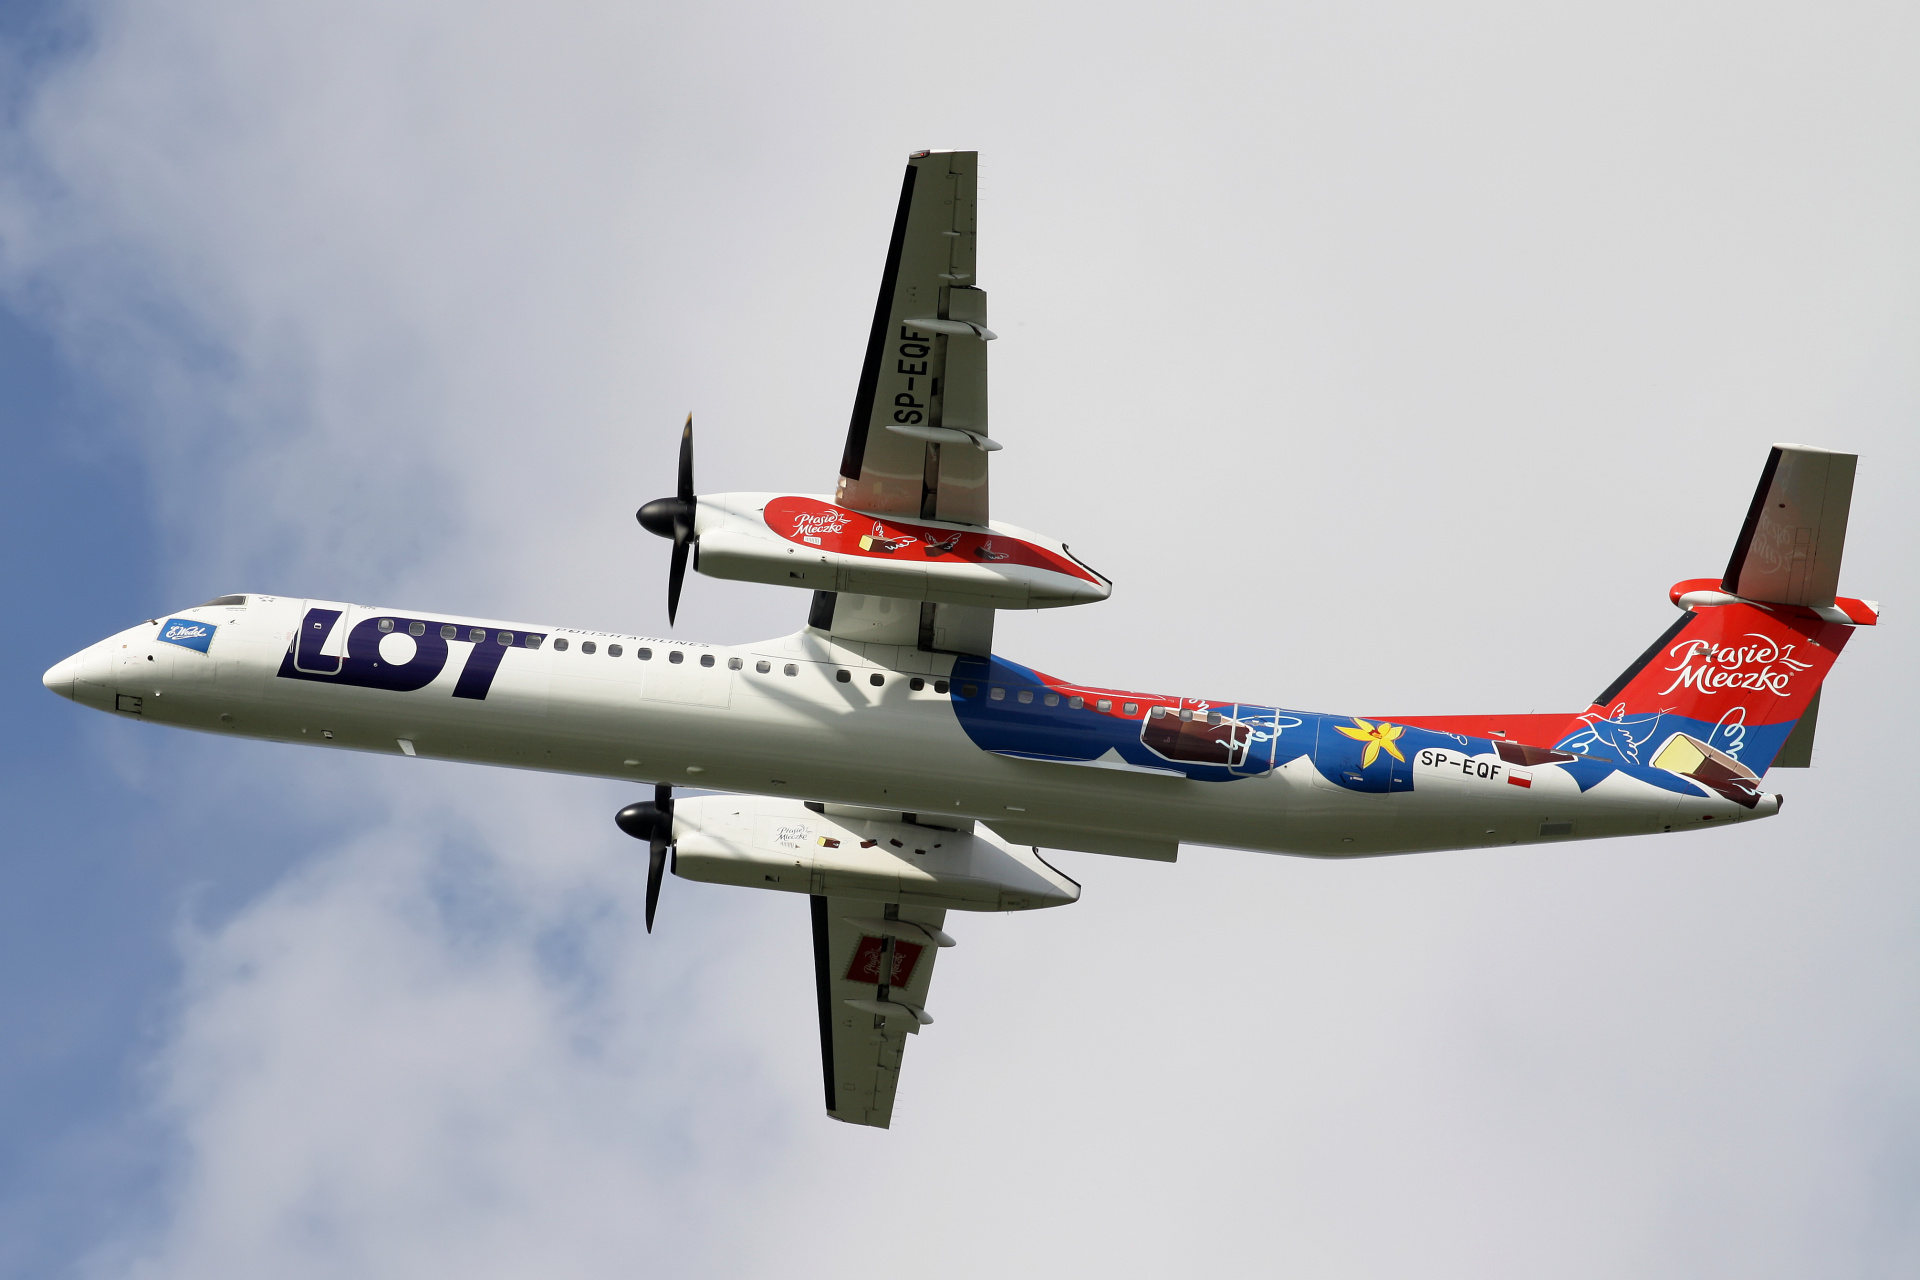 SP-EQF (Wedel Ptasie Mleczko livery) (Aircraft » EPWA Spotting » De Havilland Canada DHC-8 Dash 8 » LOT Polish Airlines)